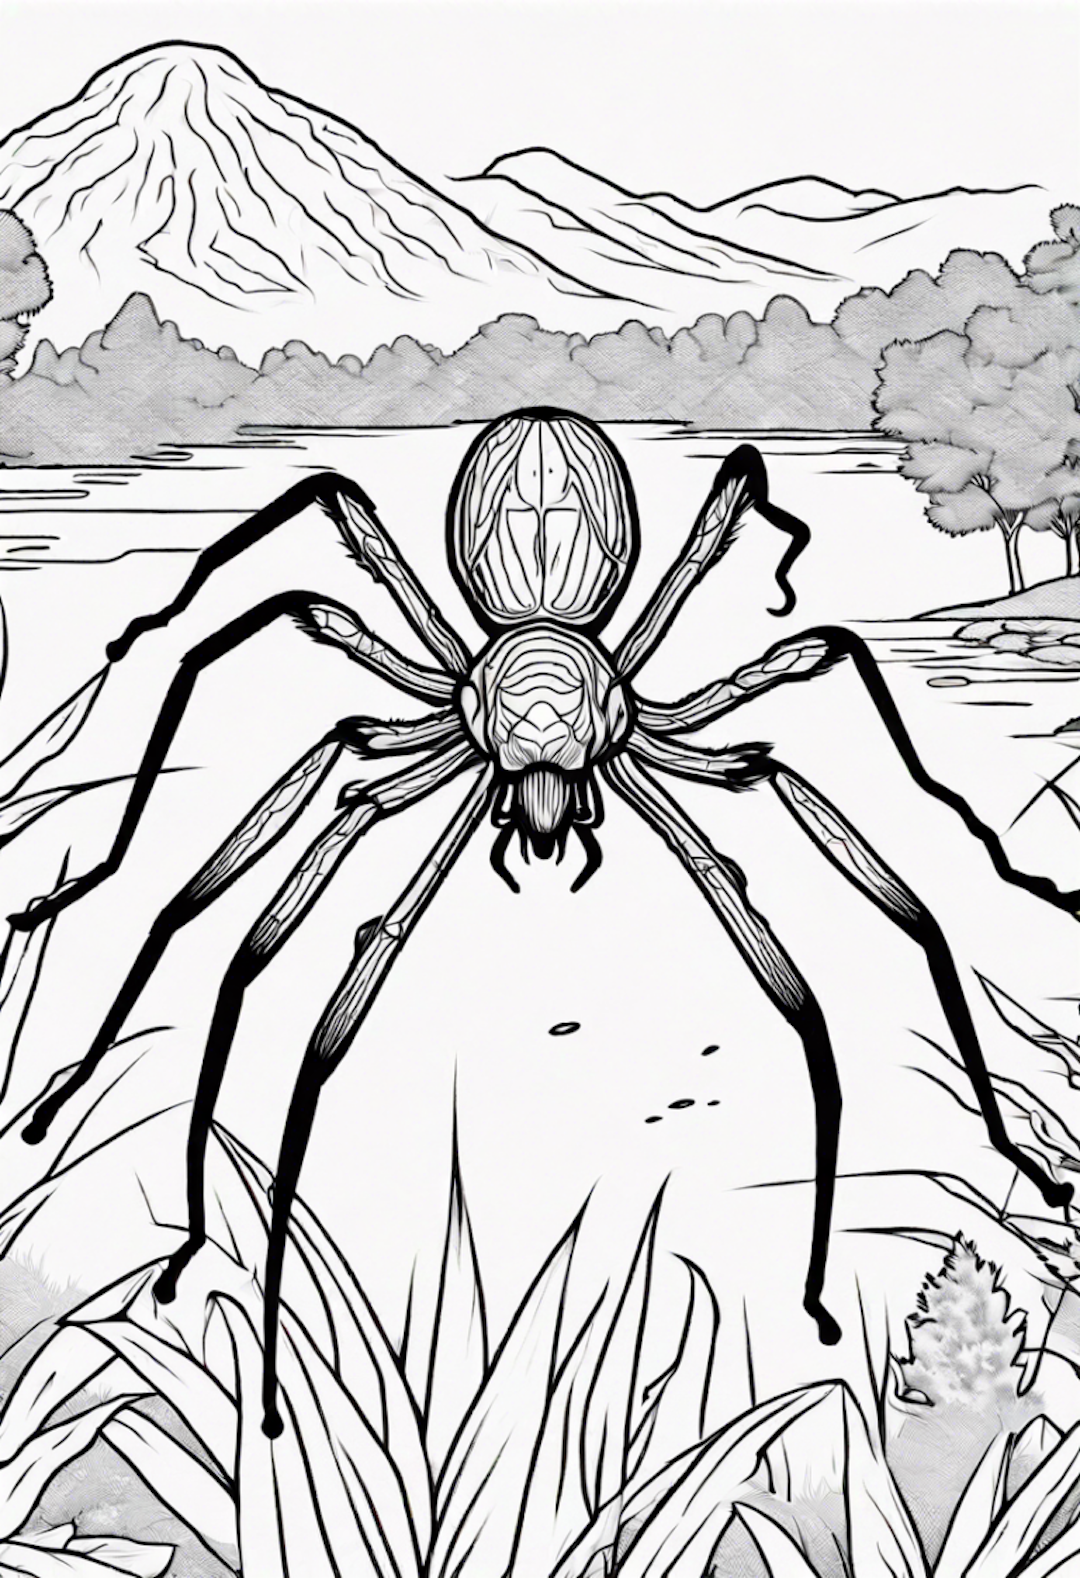 Huntsman Spider coloring pages